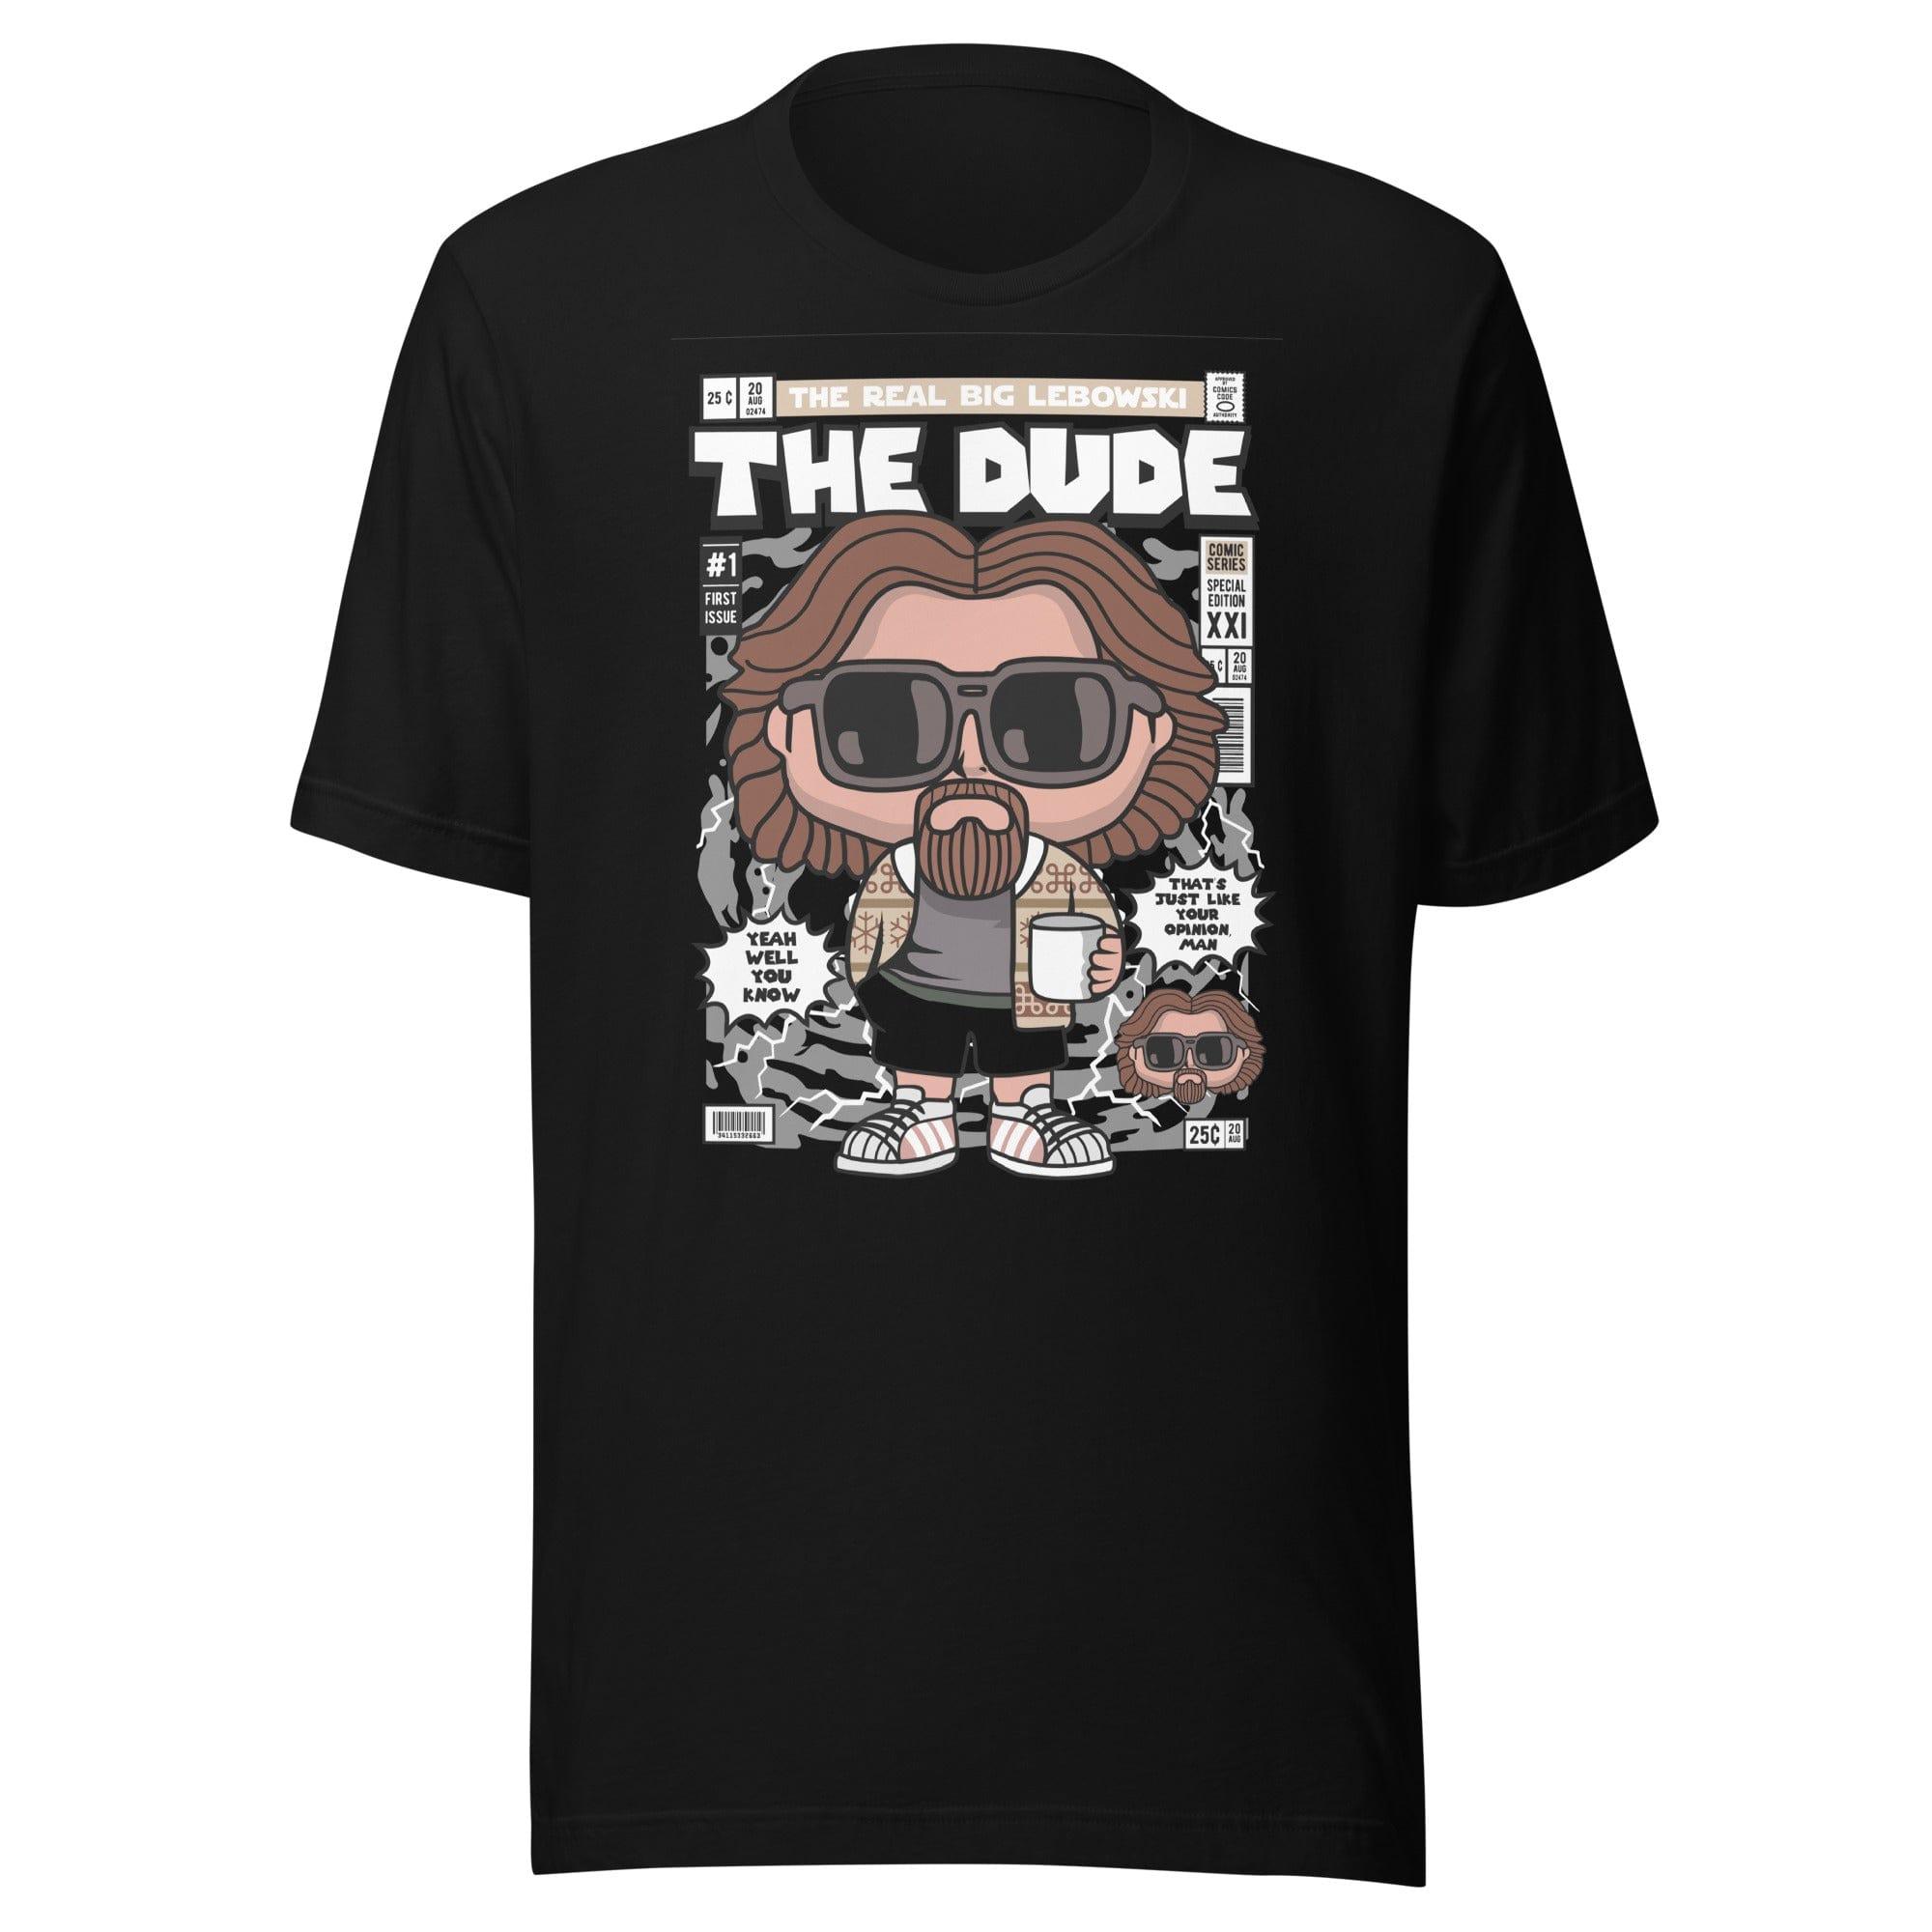 Cult Classic T-shirt 90's Film The Big Lebowski Pop Culture Animated The Dude Short Sleeve Top - TopKoalaTee